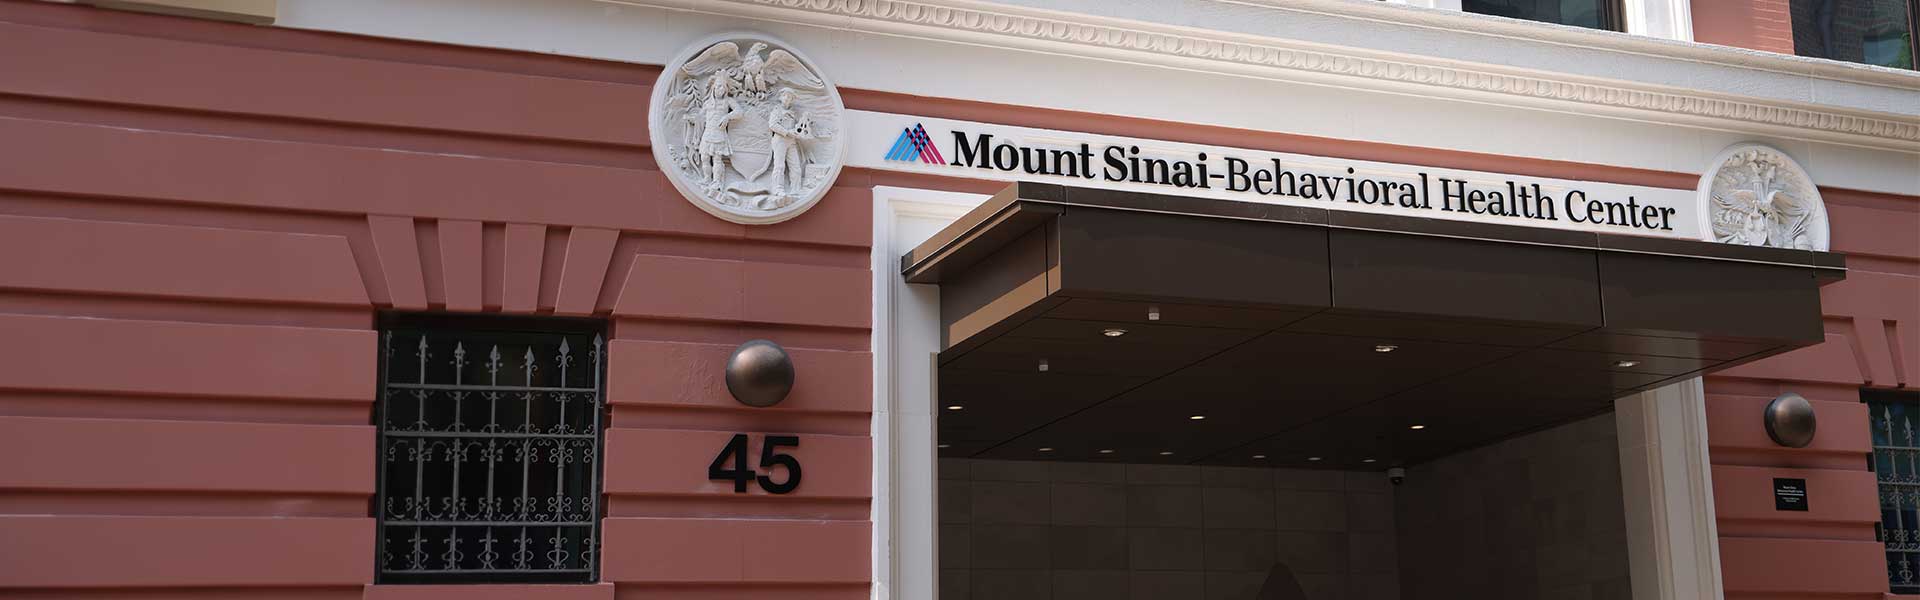 image of Mount Sinai-Behavioral Health Center front doors